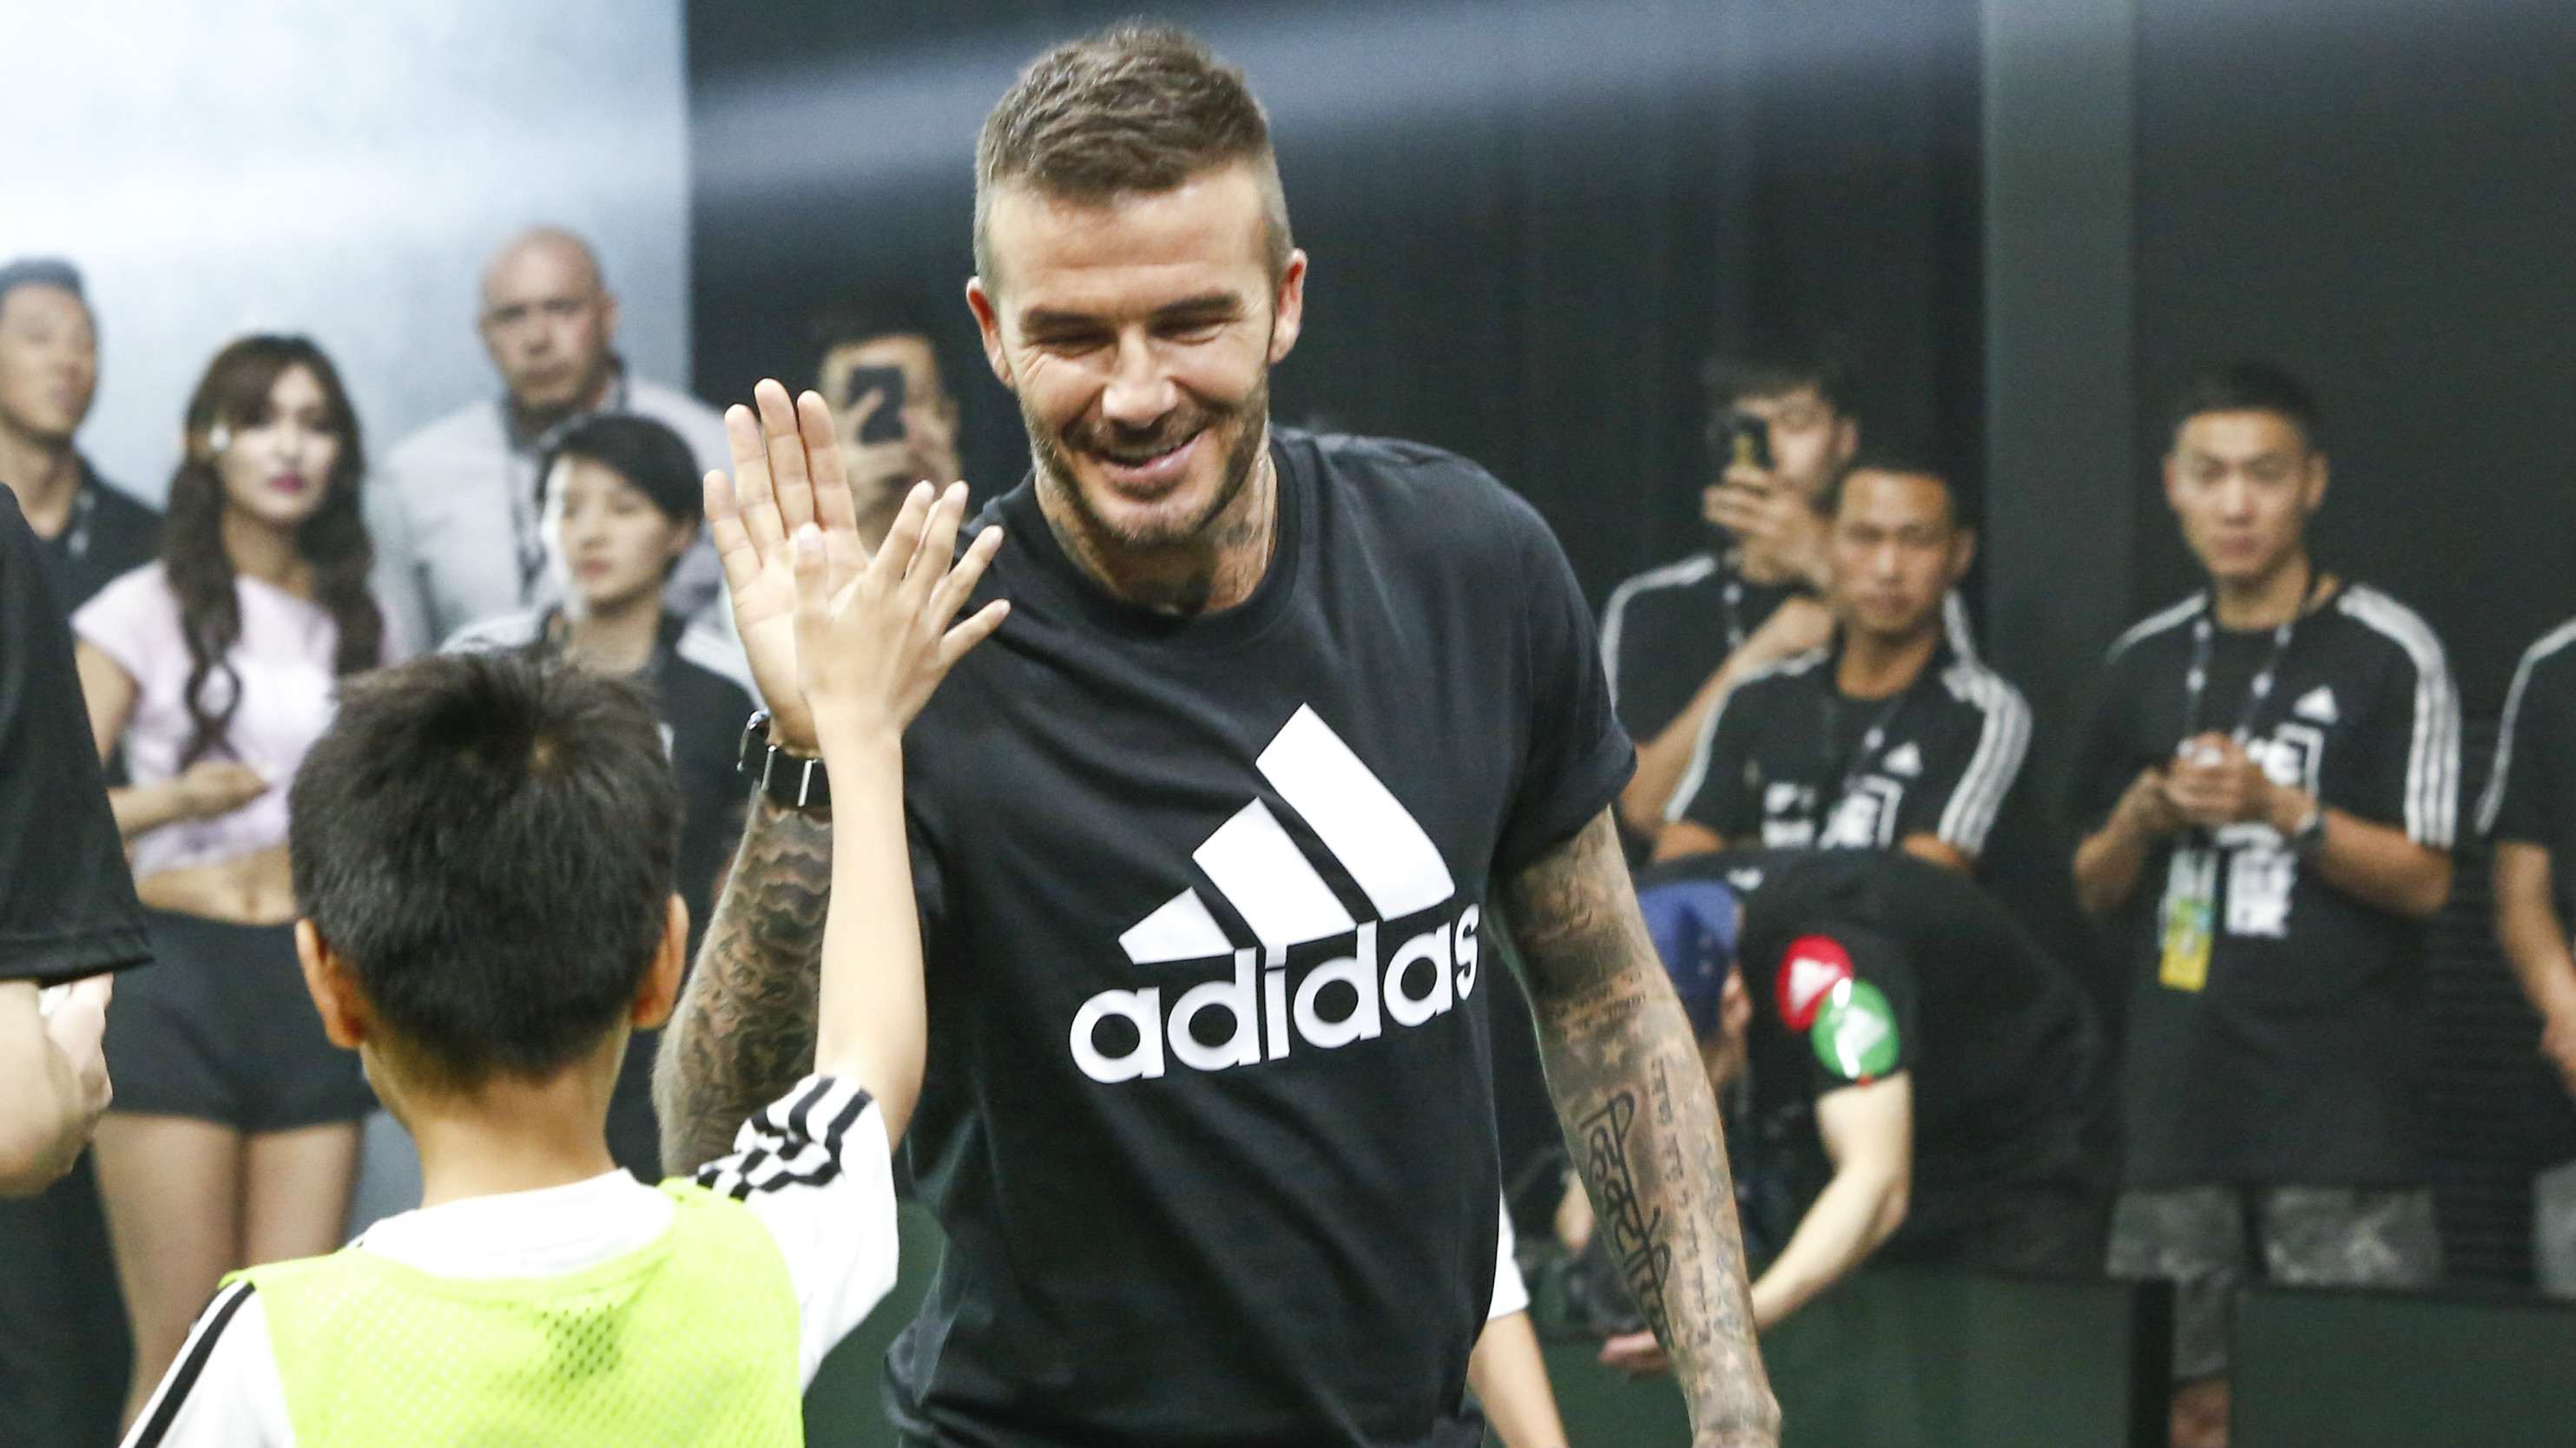 David Beckham motivates young footballers in China - CGTN